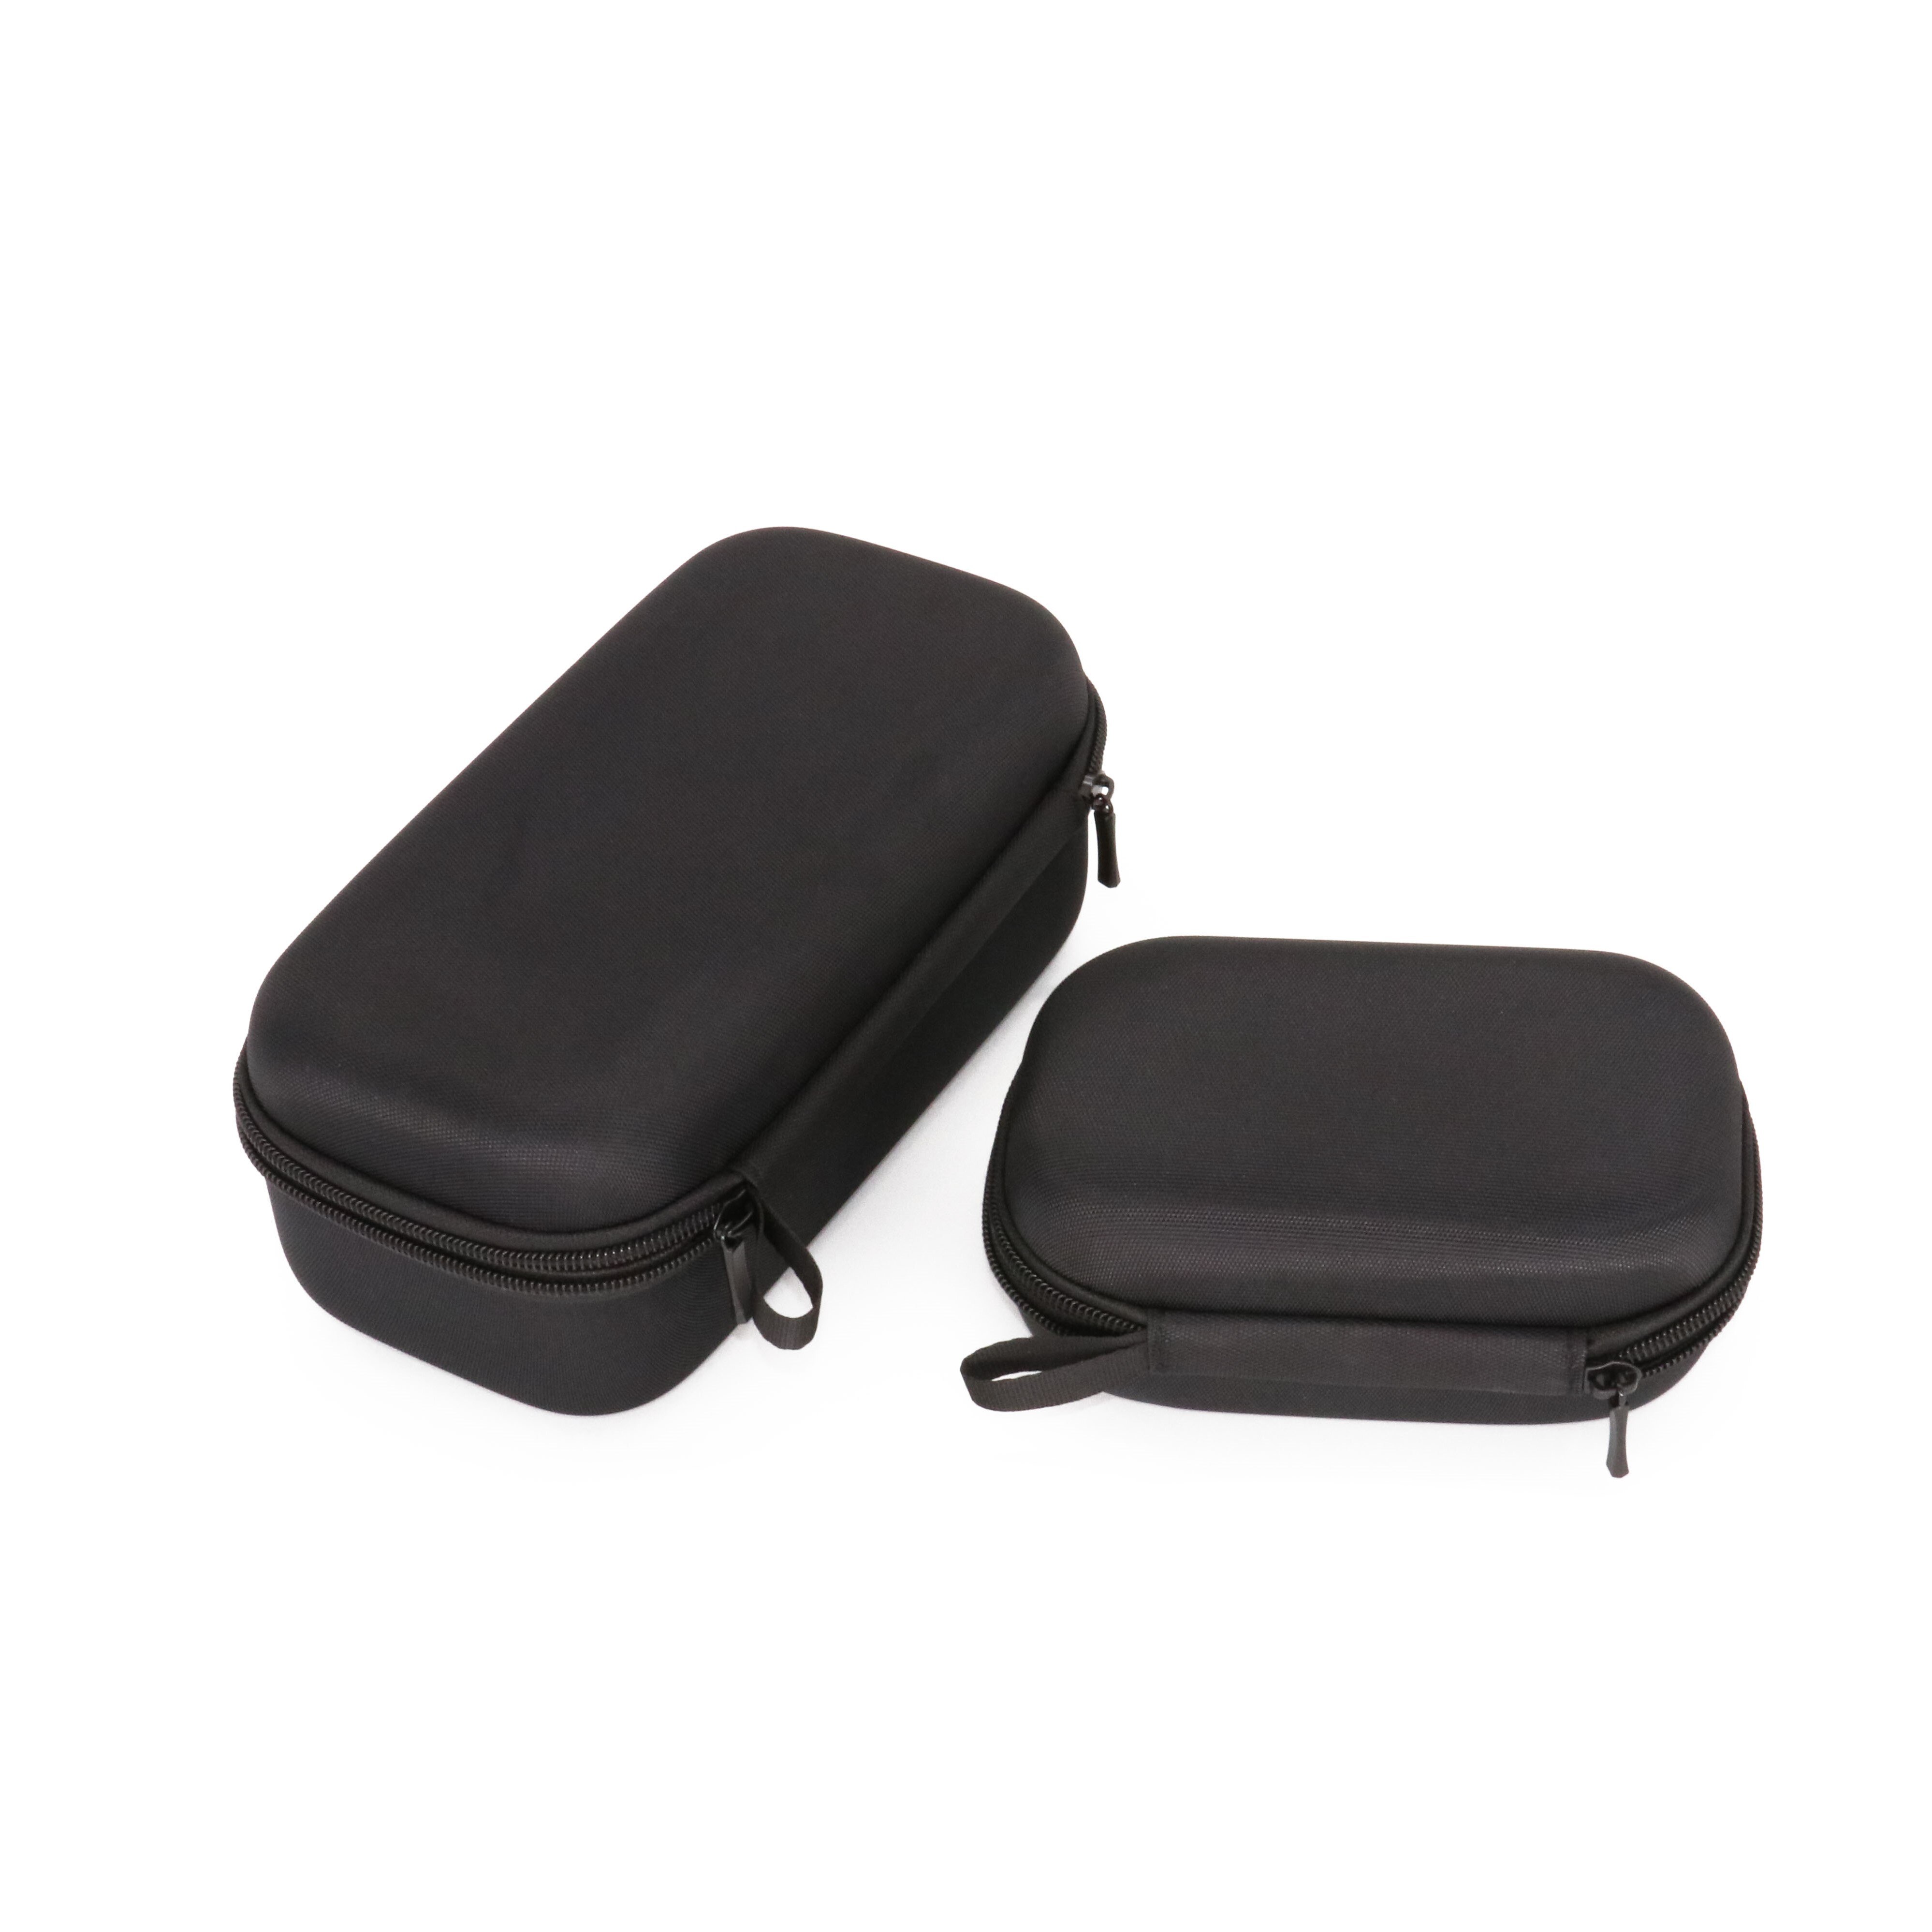 Case Bag Portable Carrying Case for DJI Mavic 2 Pro Zoom Drone Remote Controller Portable Case Protector: 2 in 1